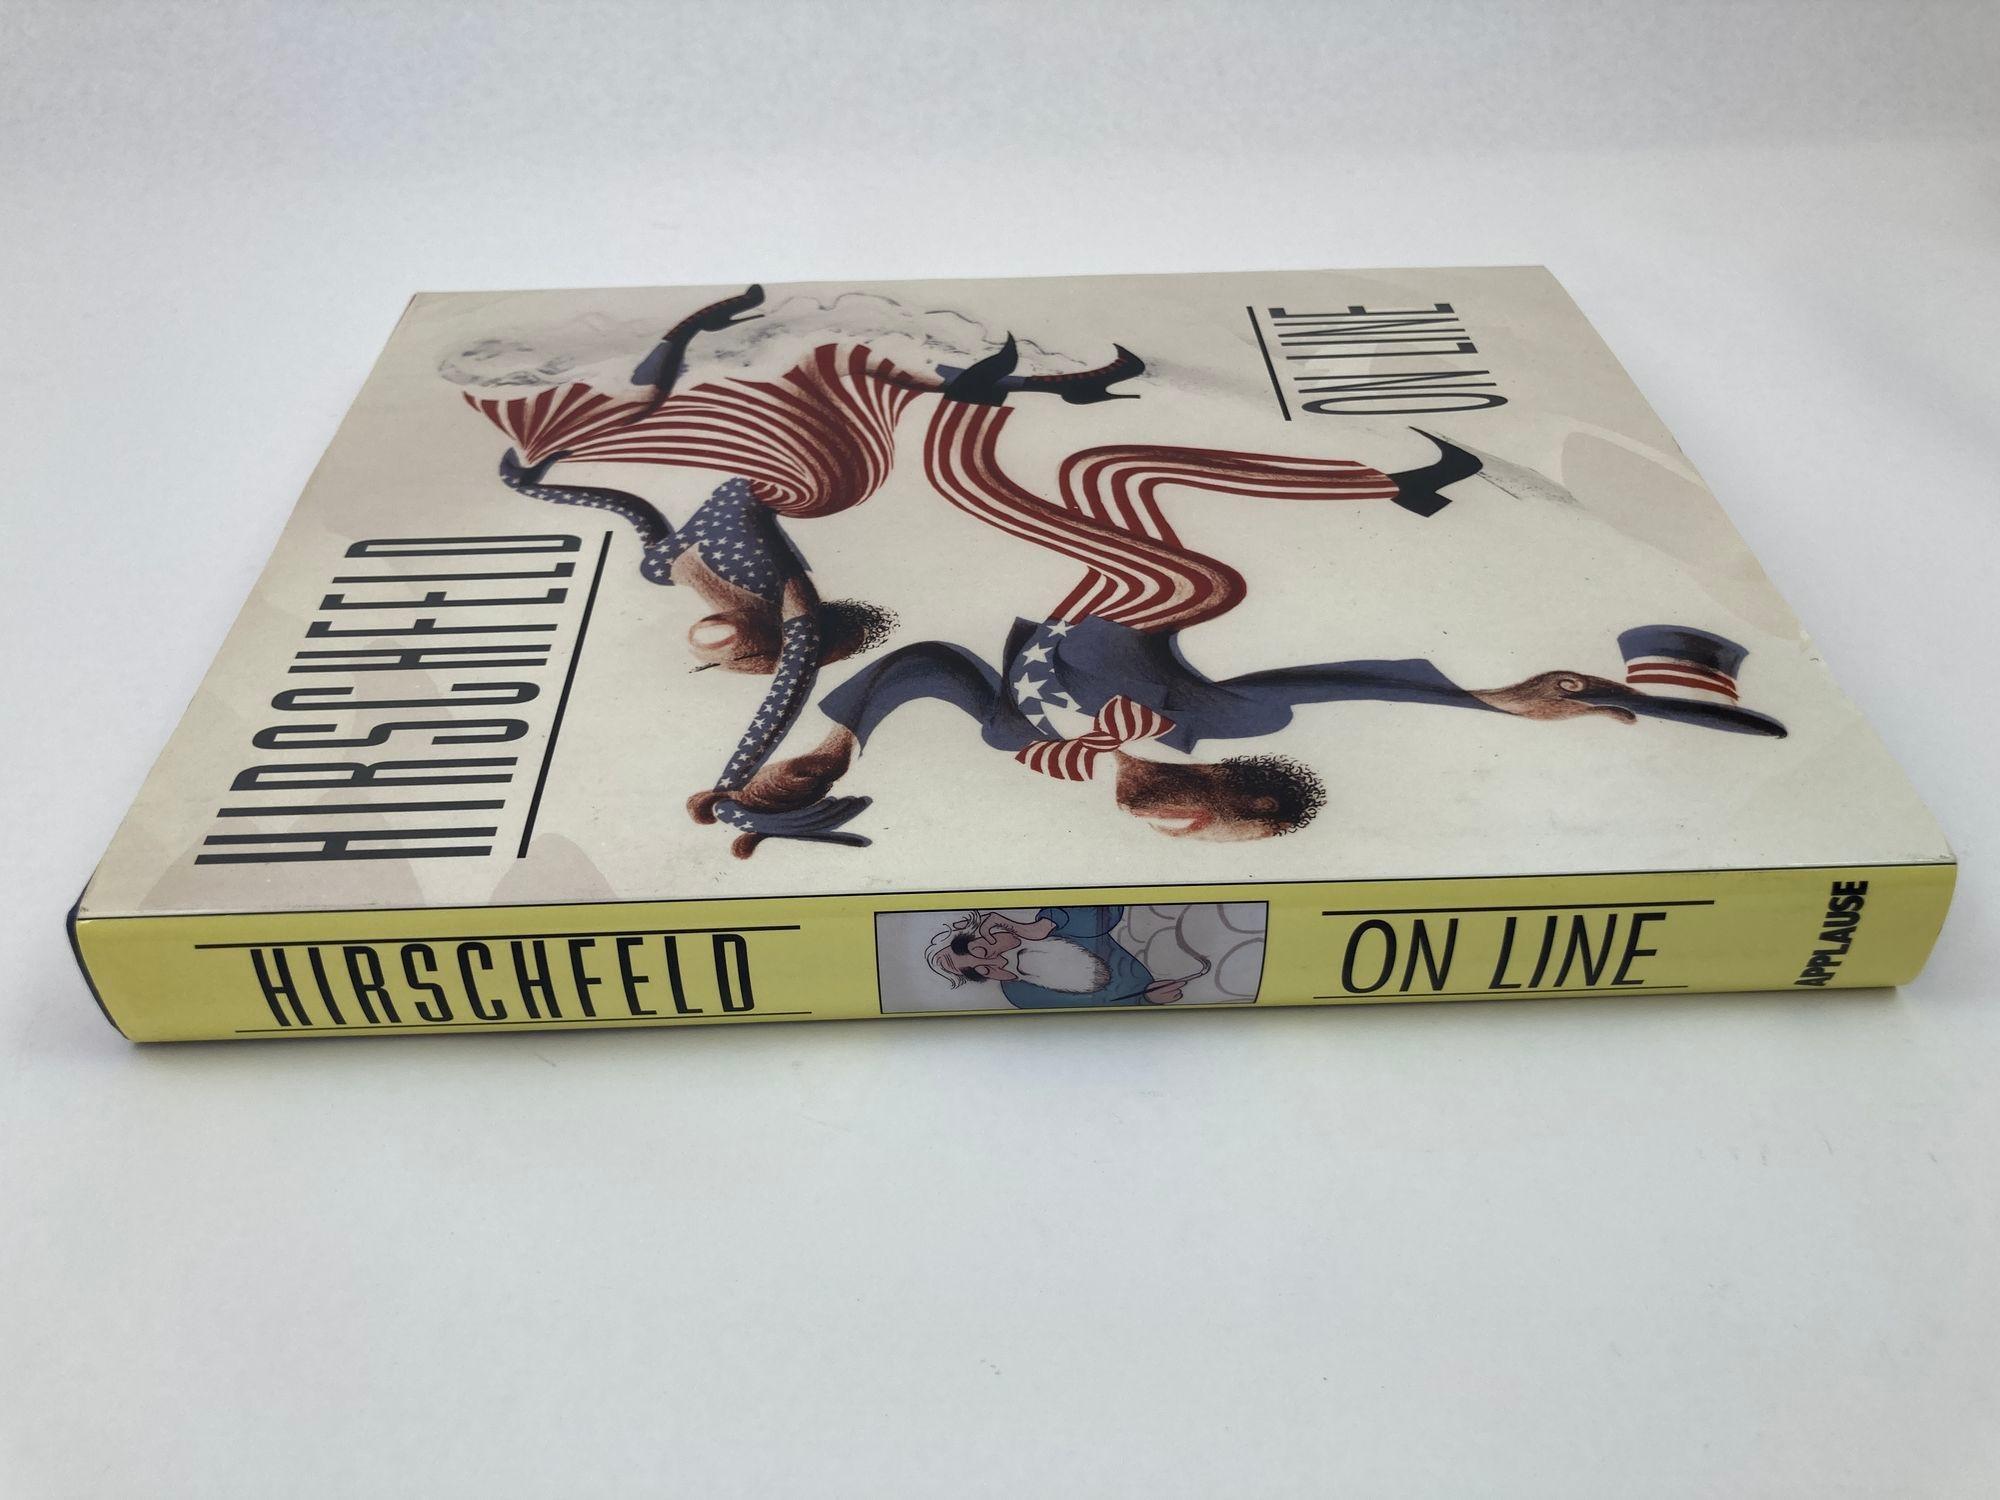 Hirschfeld On Line Hardcover Book by Al Hirschfeld For Sale 9